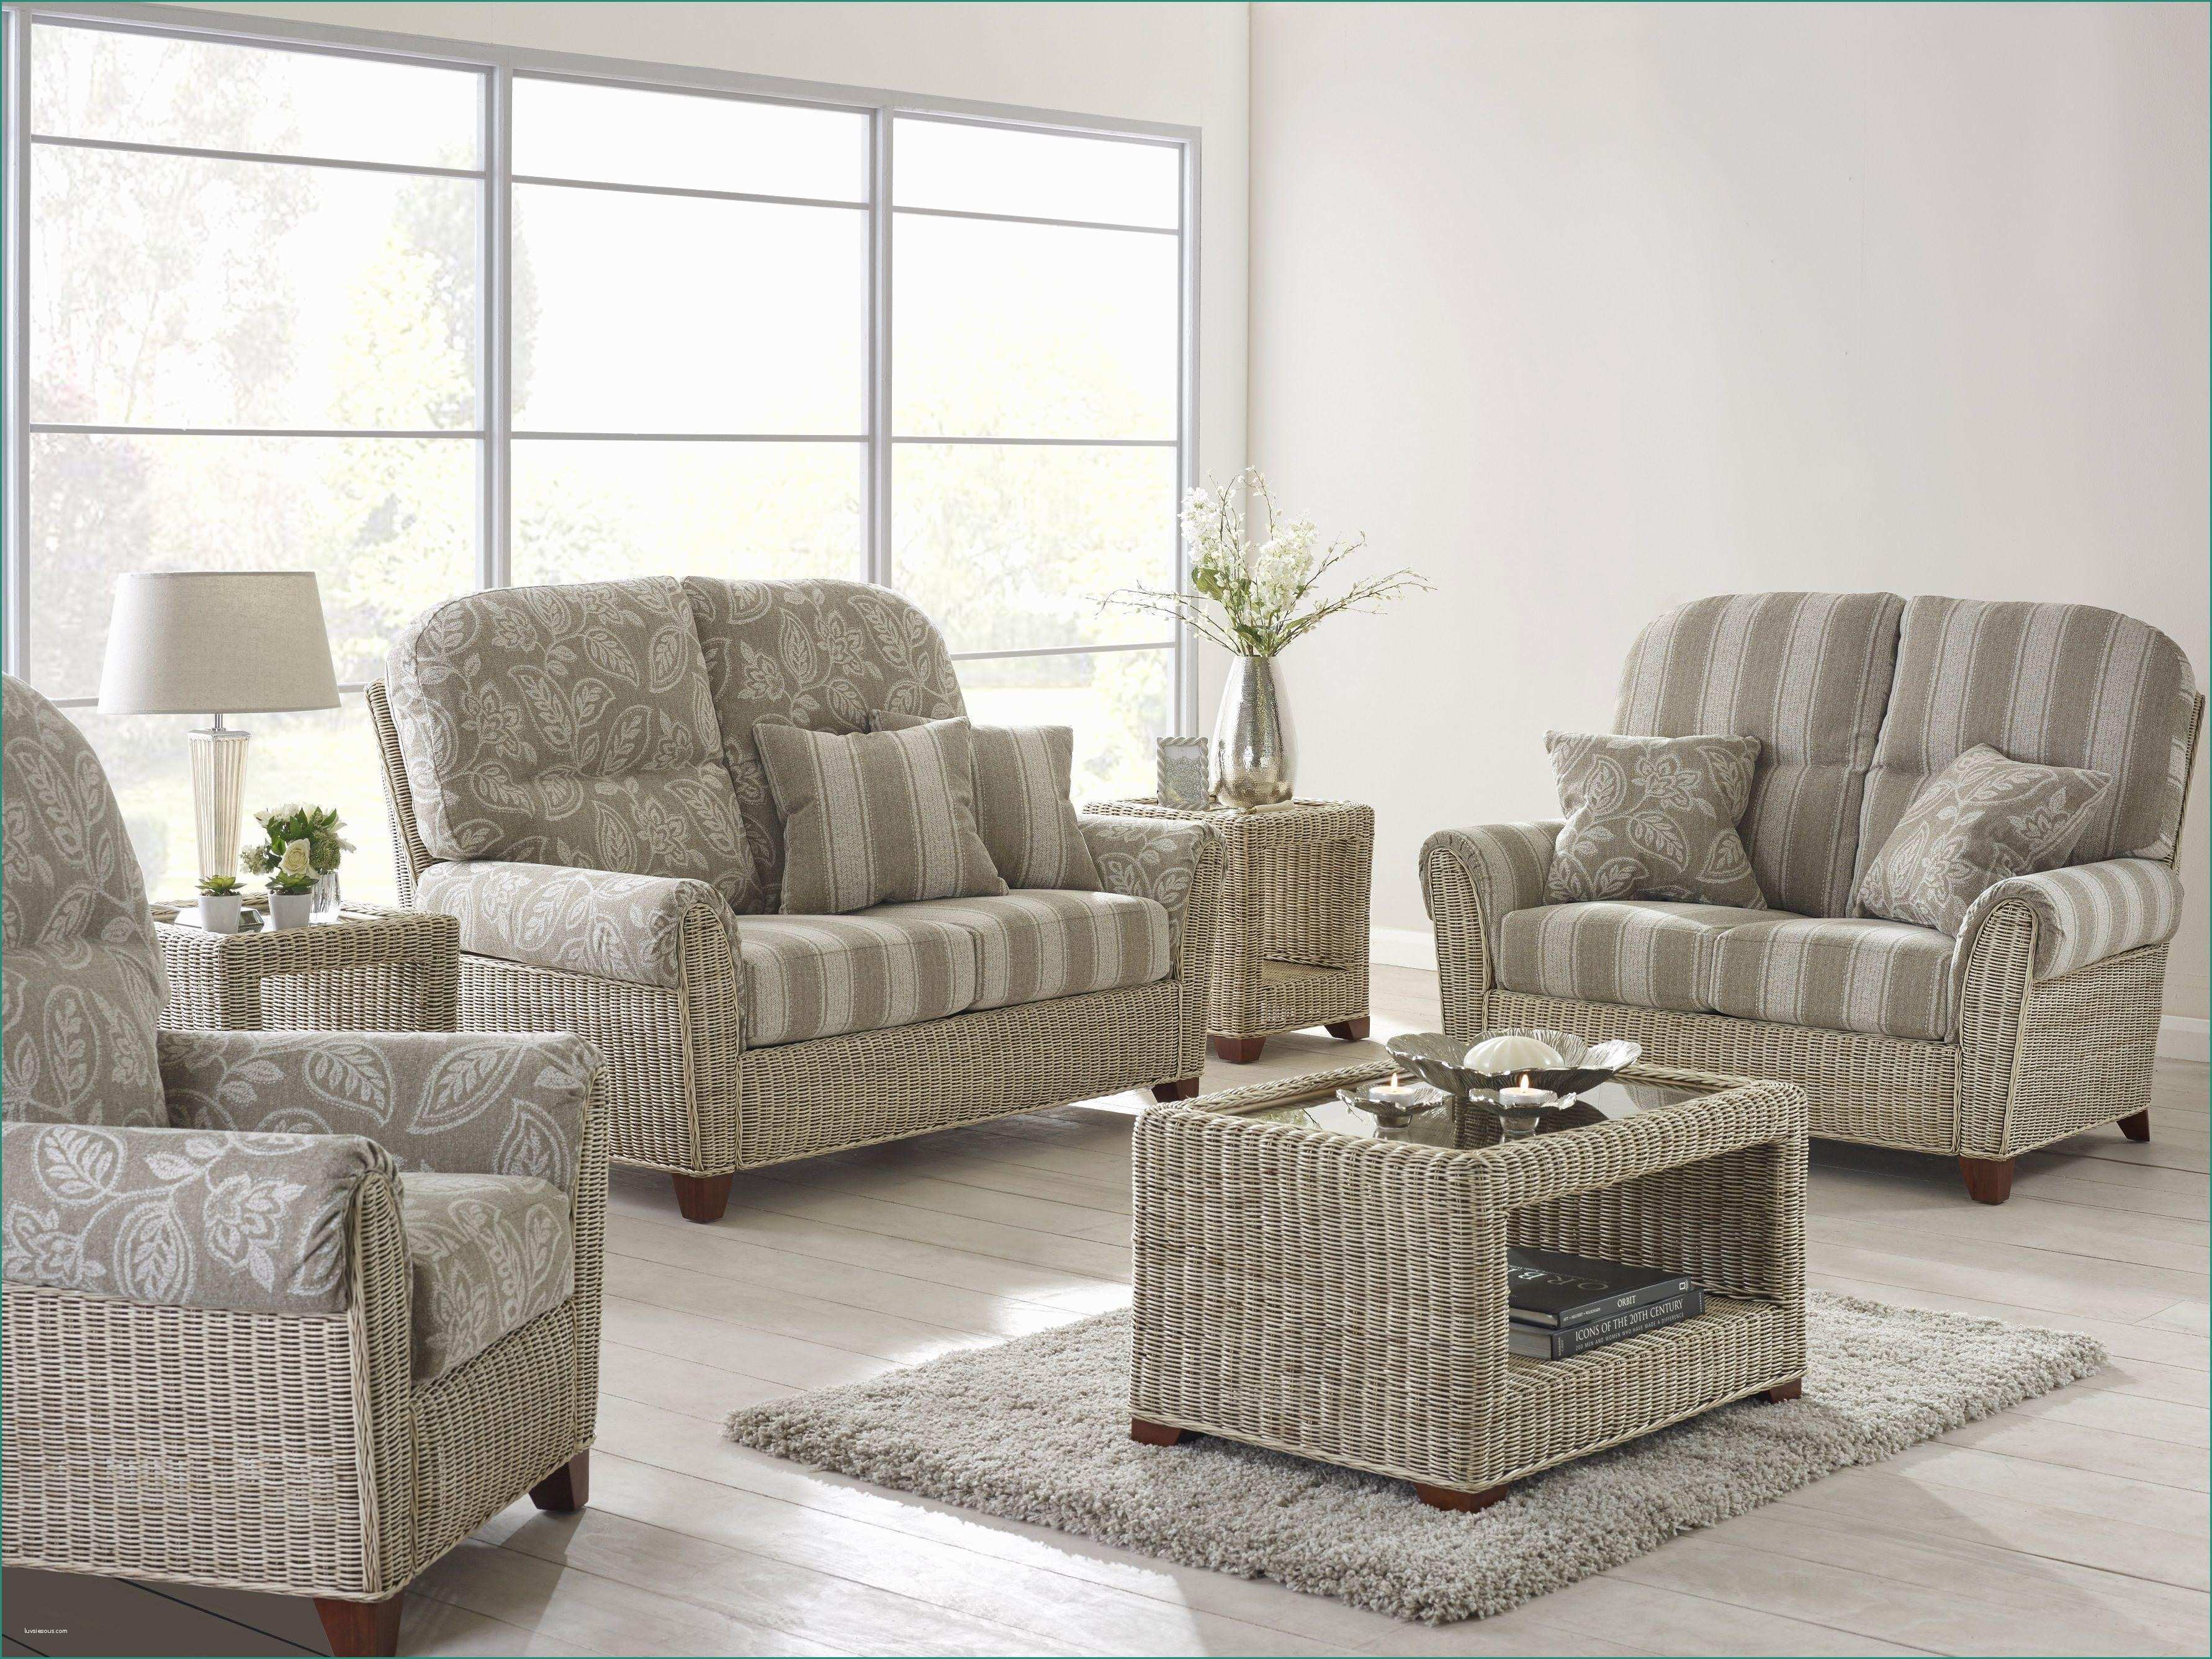 Bancali Leroy Merlin E Patio Furniture Cushion Sets Unique Wicker Outdoor sofa 0d Patio